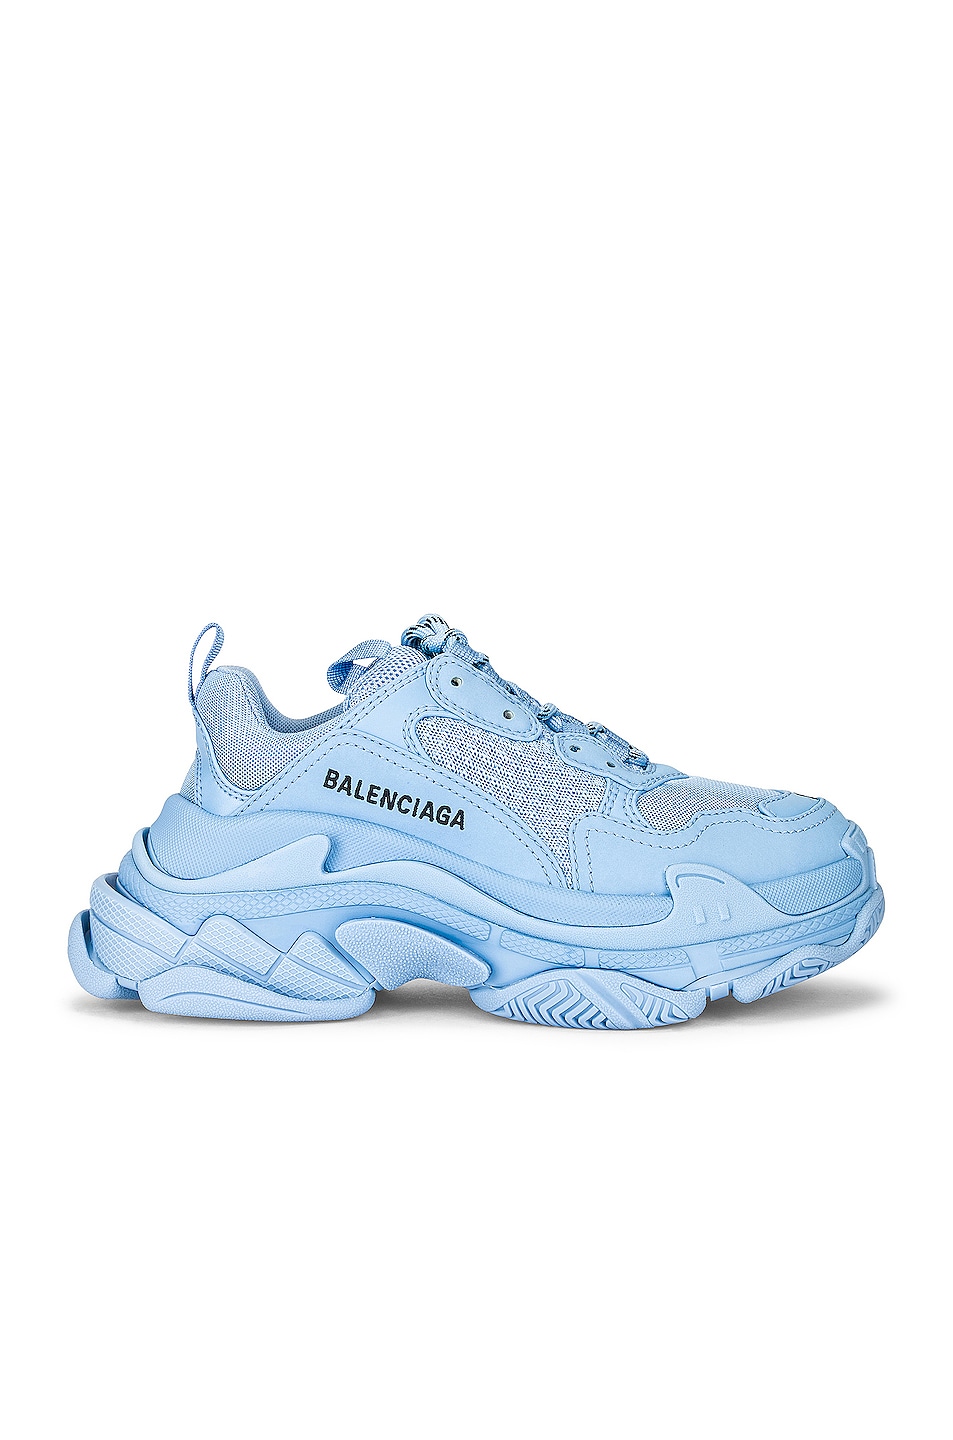 Balenciaga Triple S Sneakers in Light Blue | FWRD